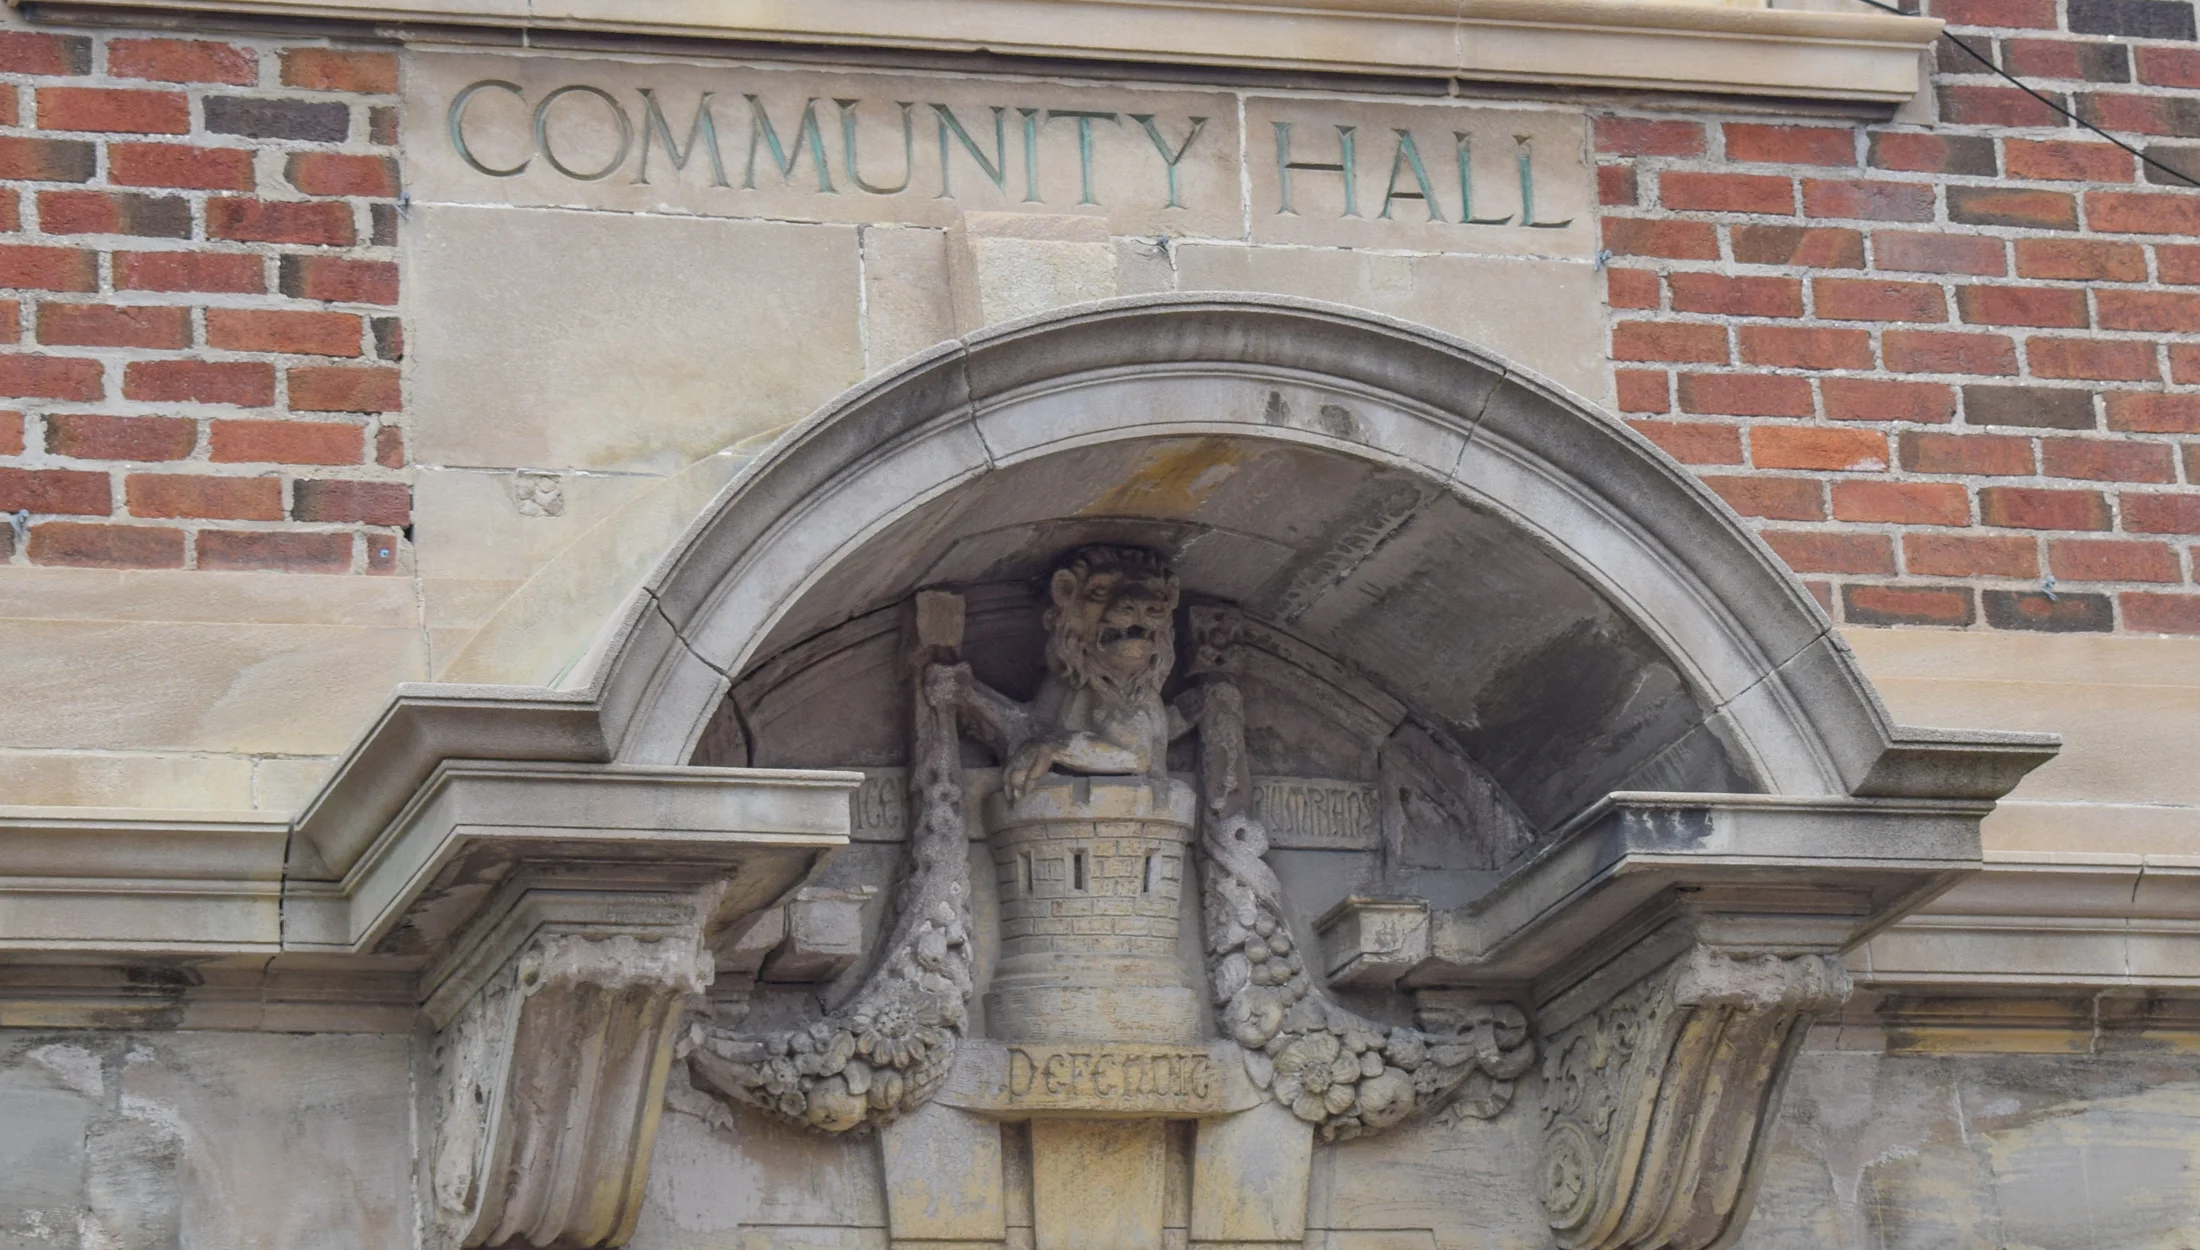 Newcastle Community Hall